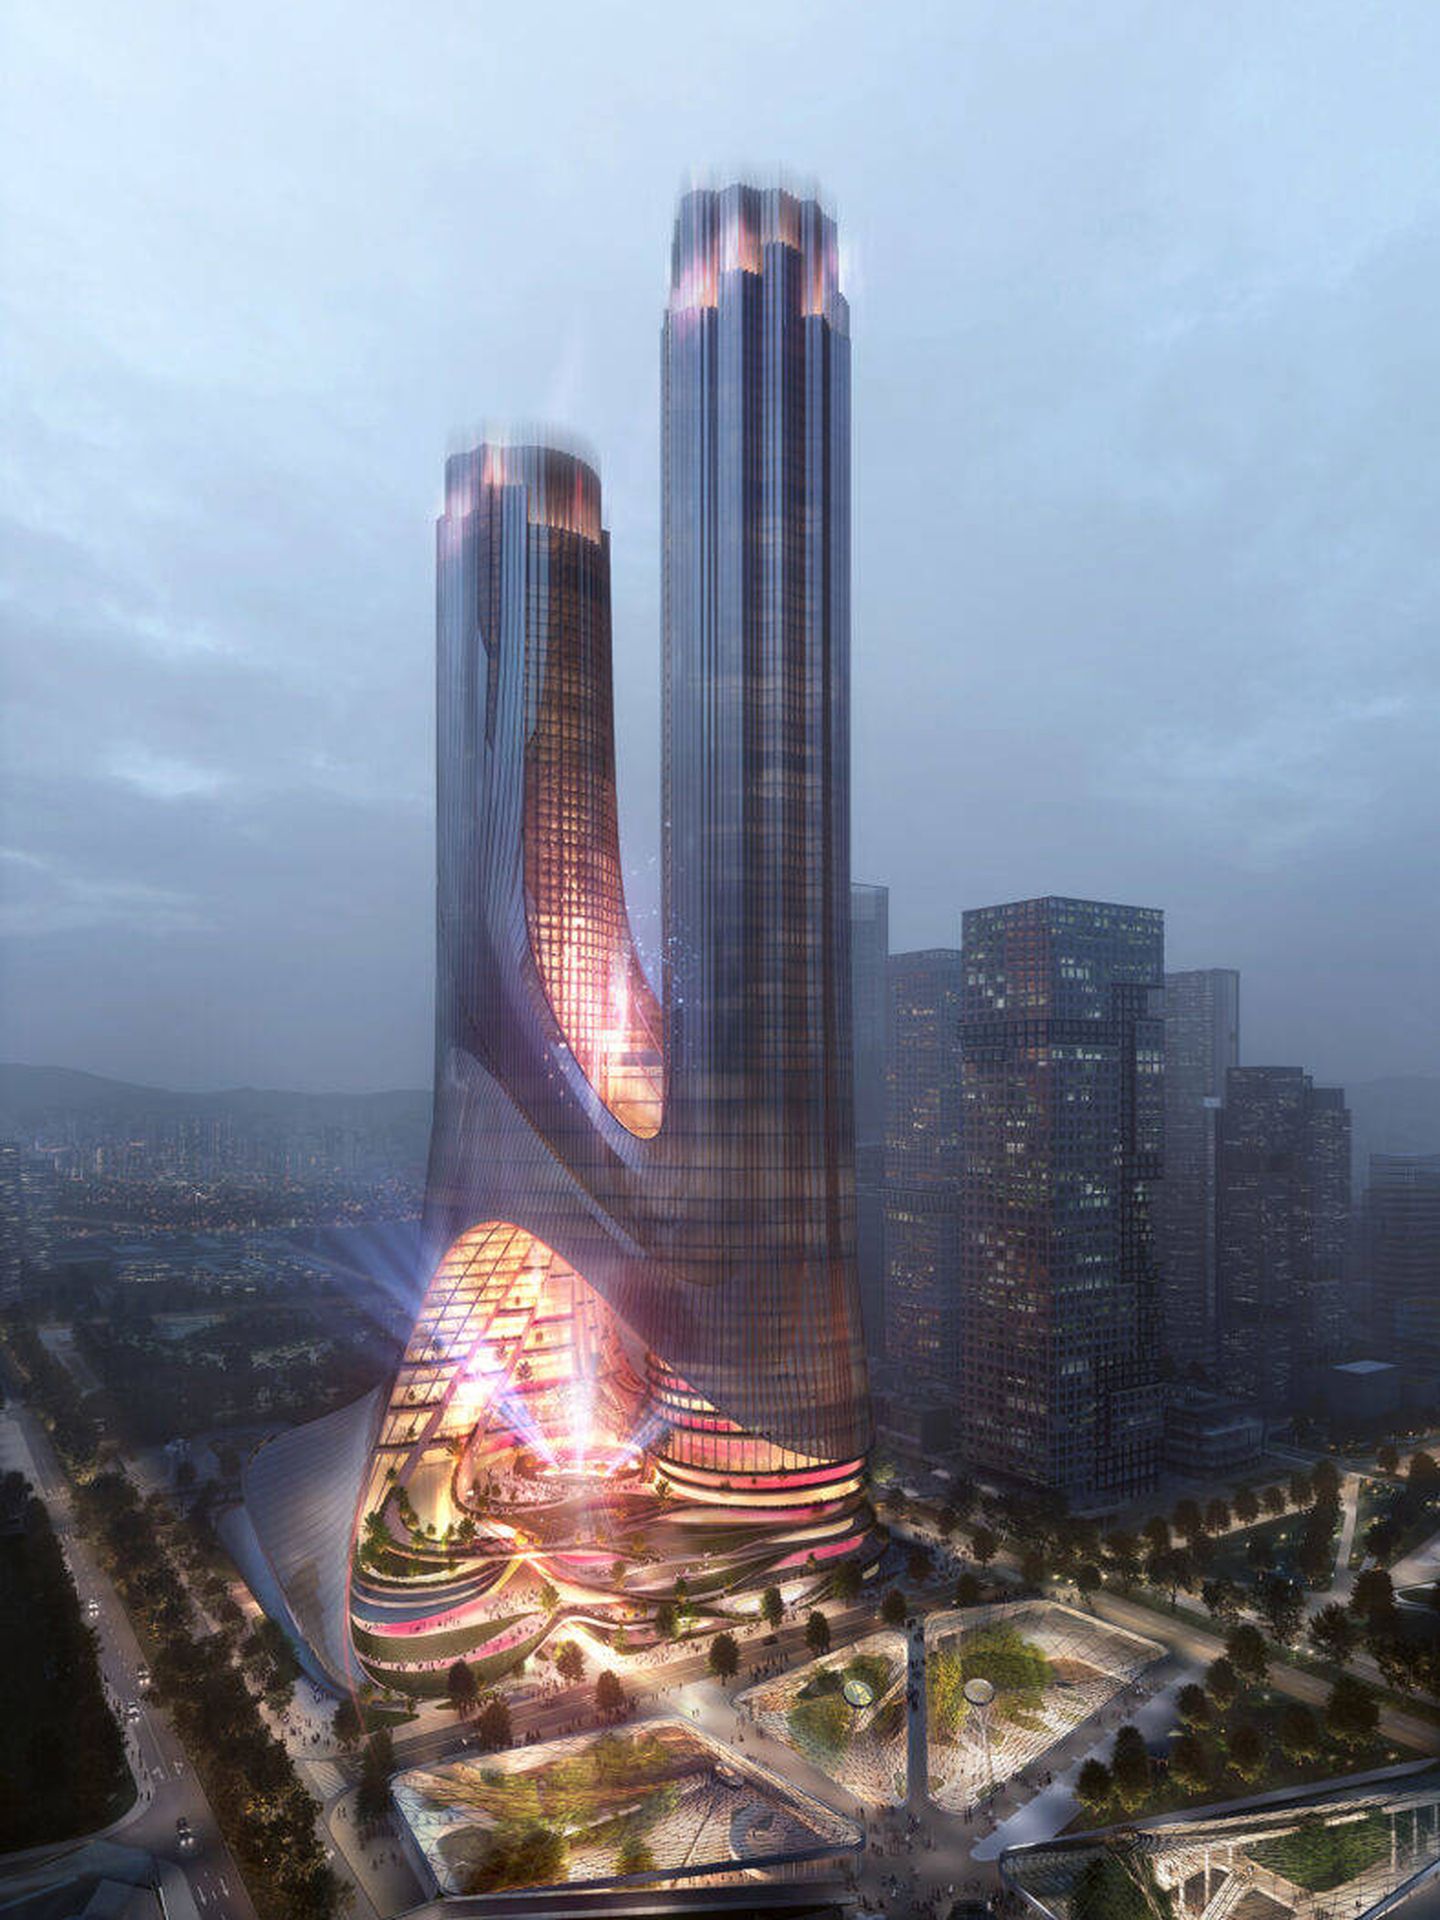 El nuevo proyecto de Zaha Hadid Architects (ZHA)